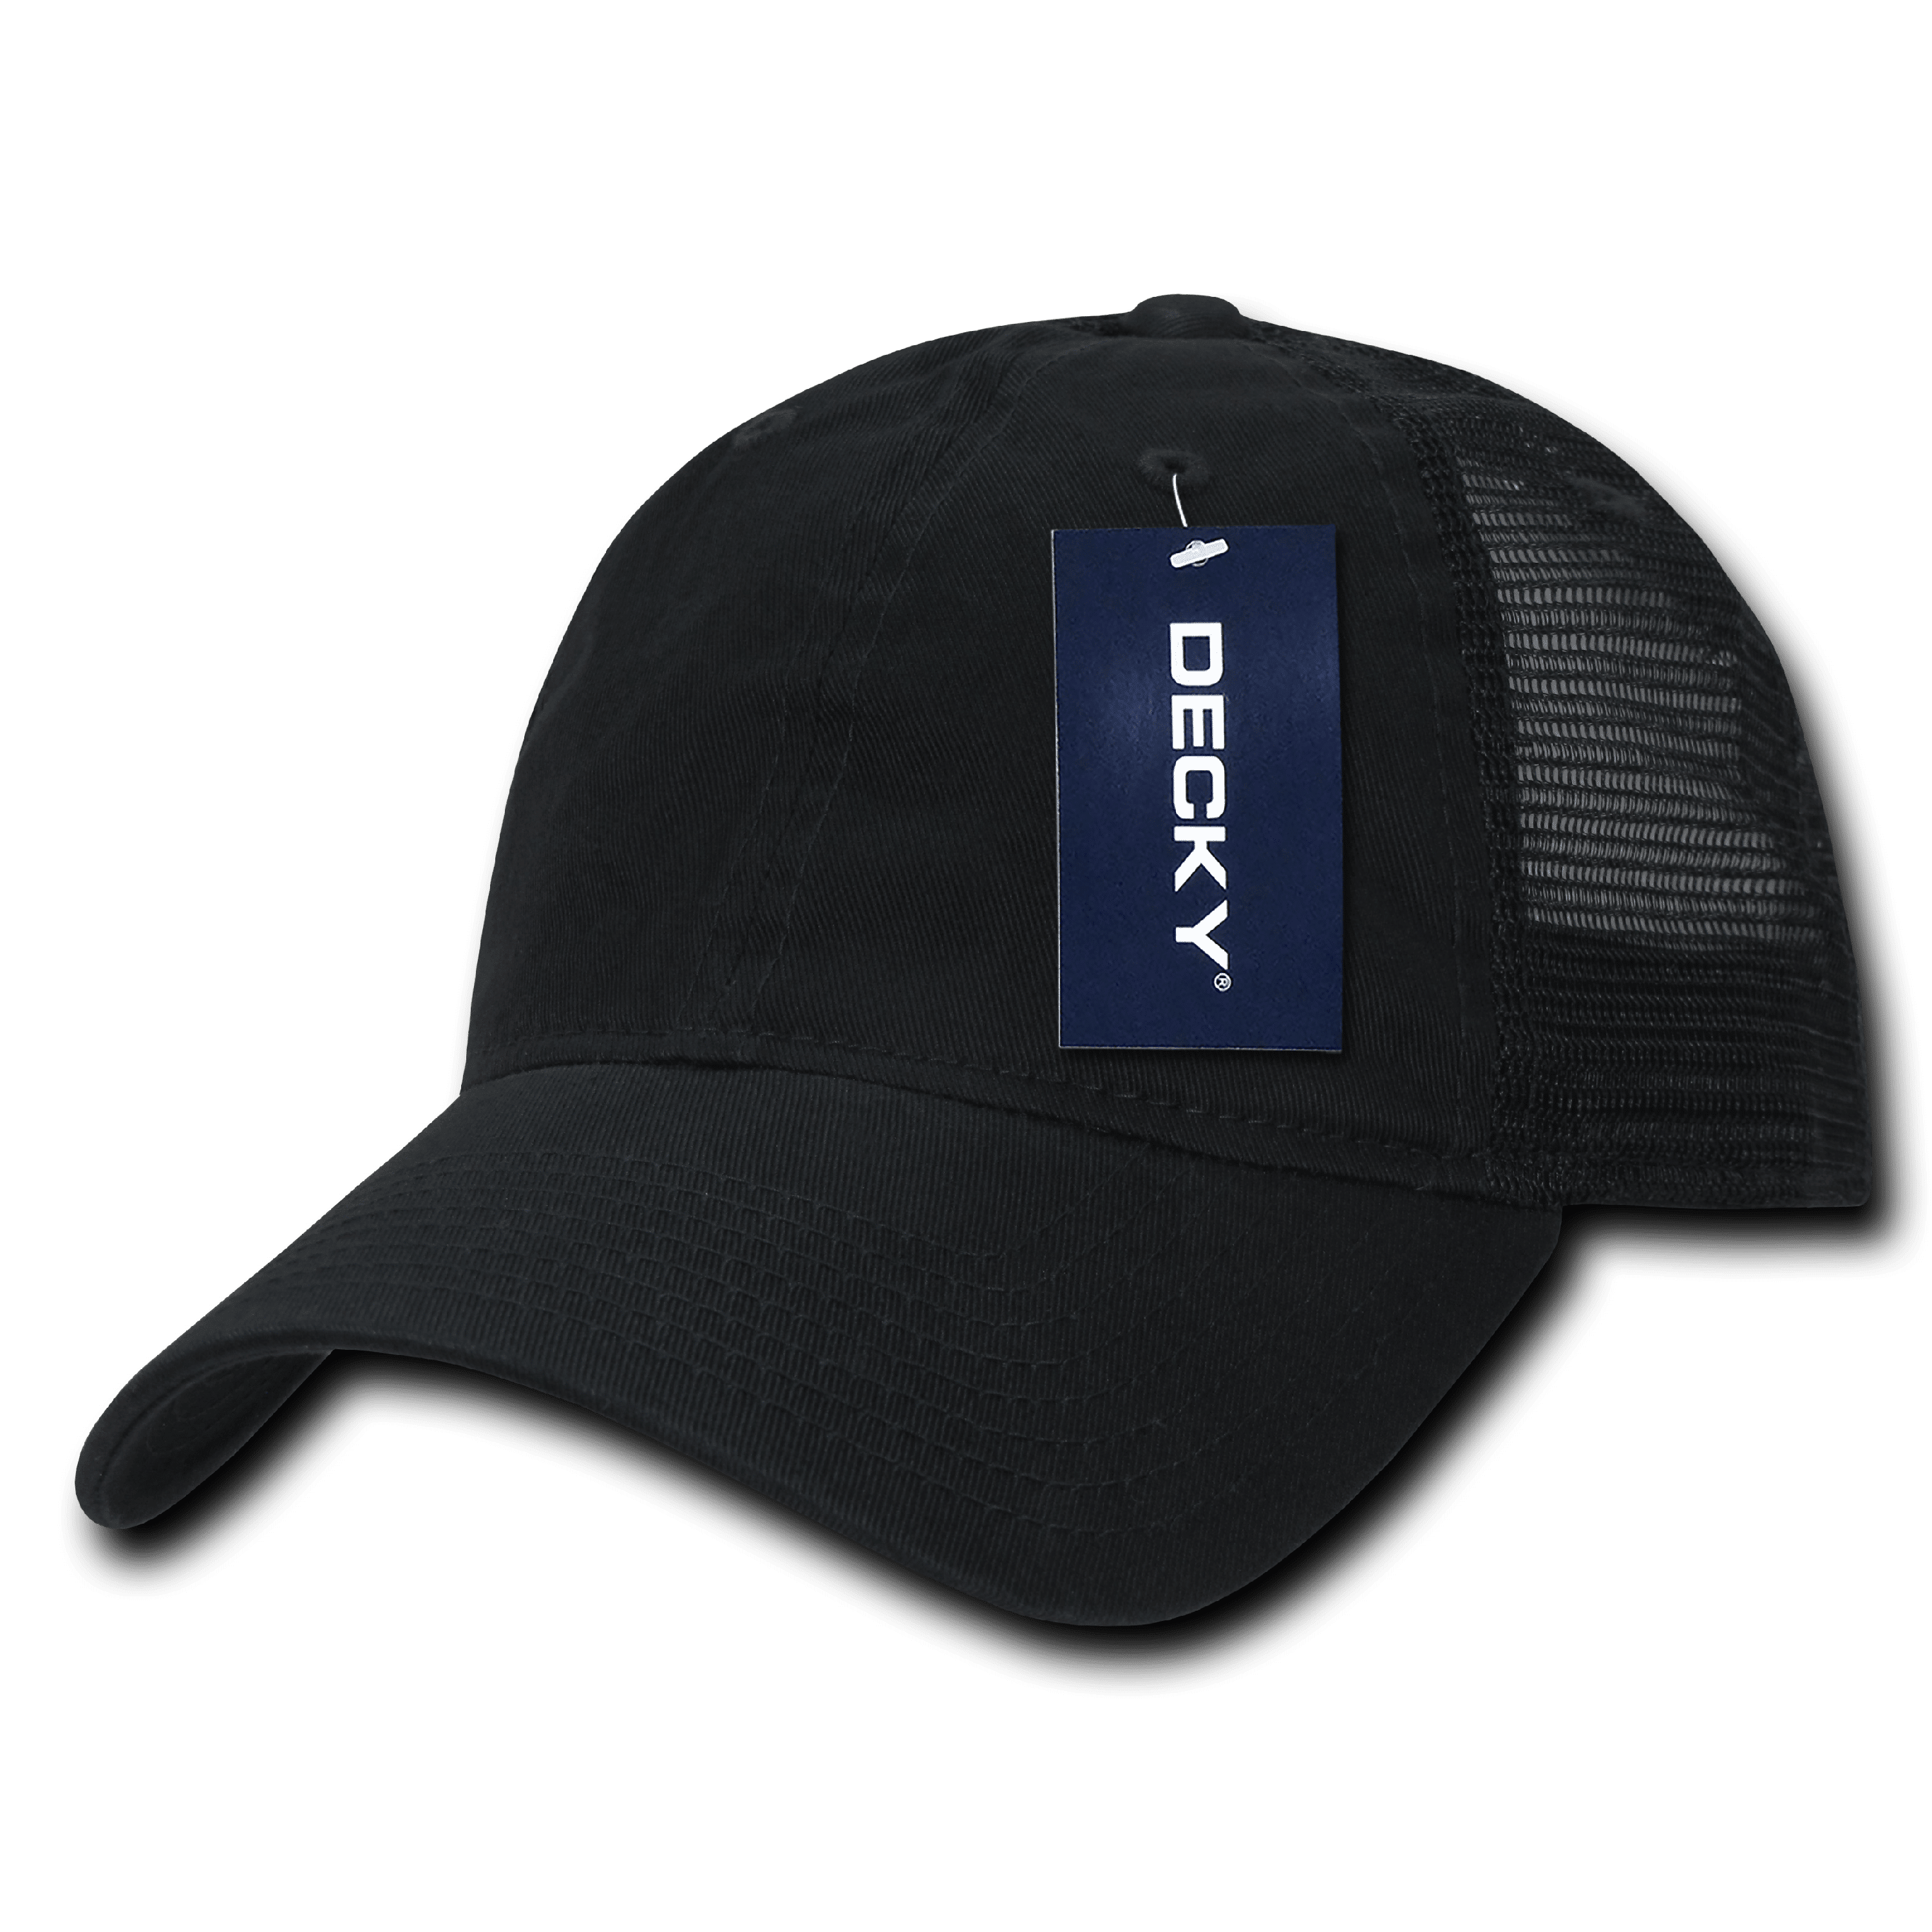 Hat Bill Women Black Snapback Hats For Curved Baseball Pre Decky Cap Trucker Relaxed Men Caps